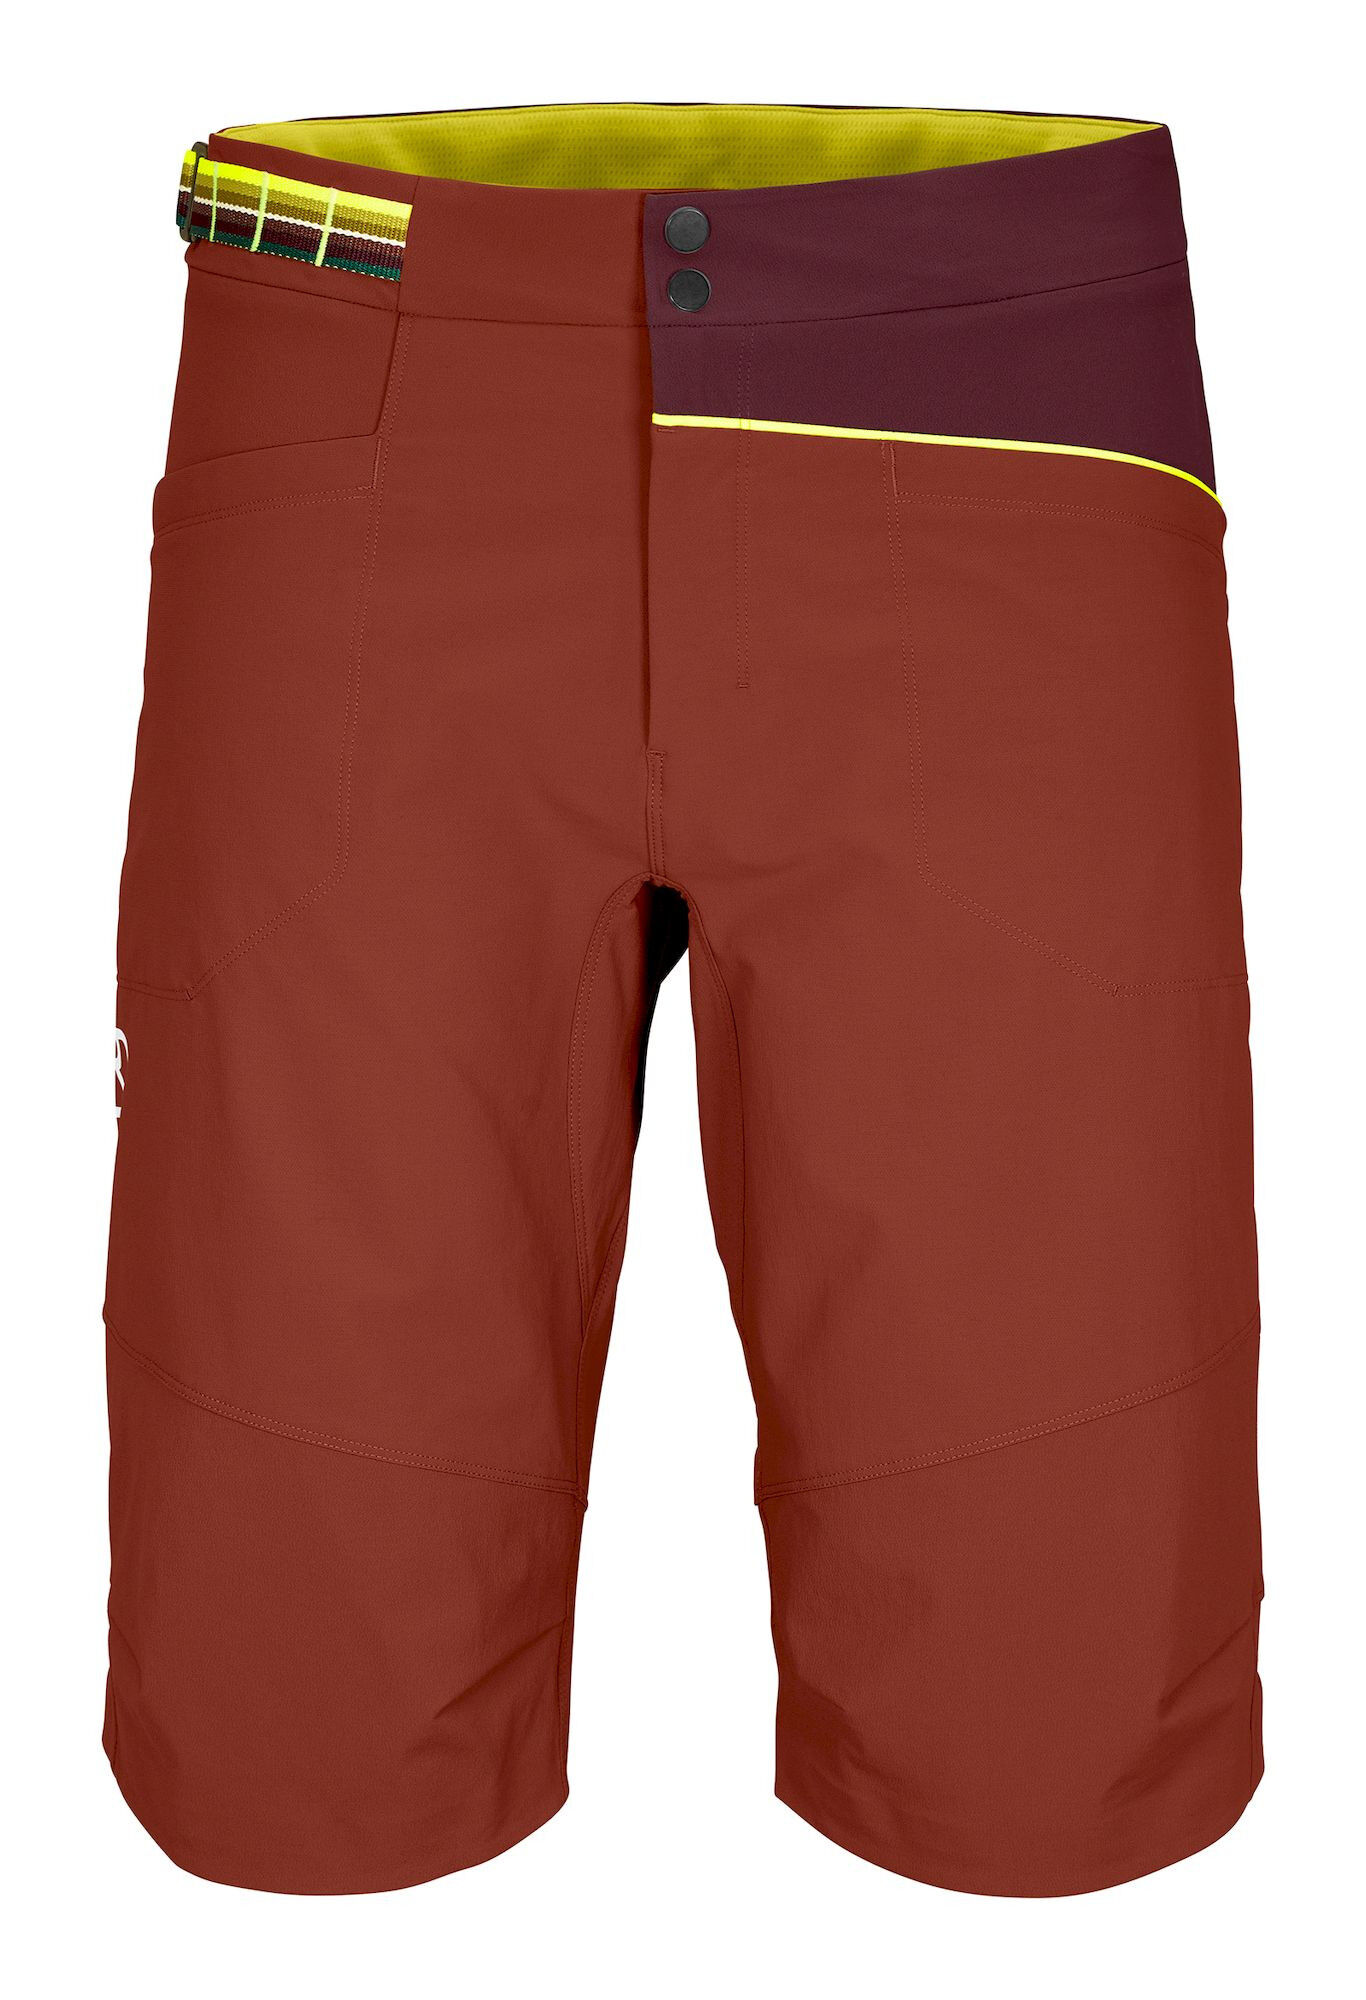 Ortovox Pala Shorts - Climbing shorts - Men's